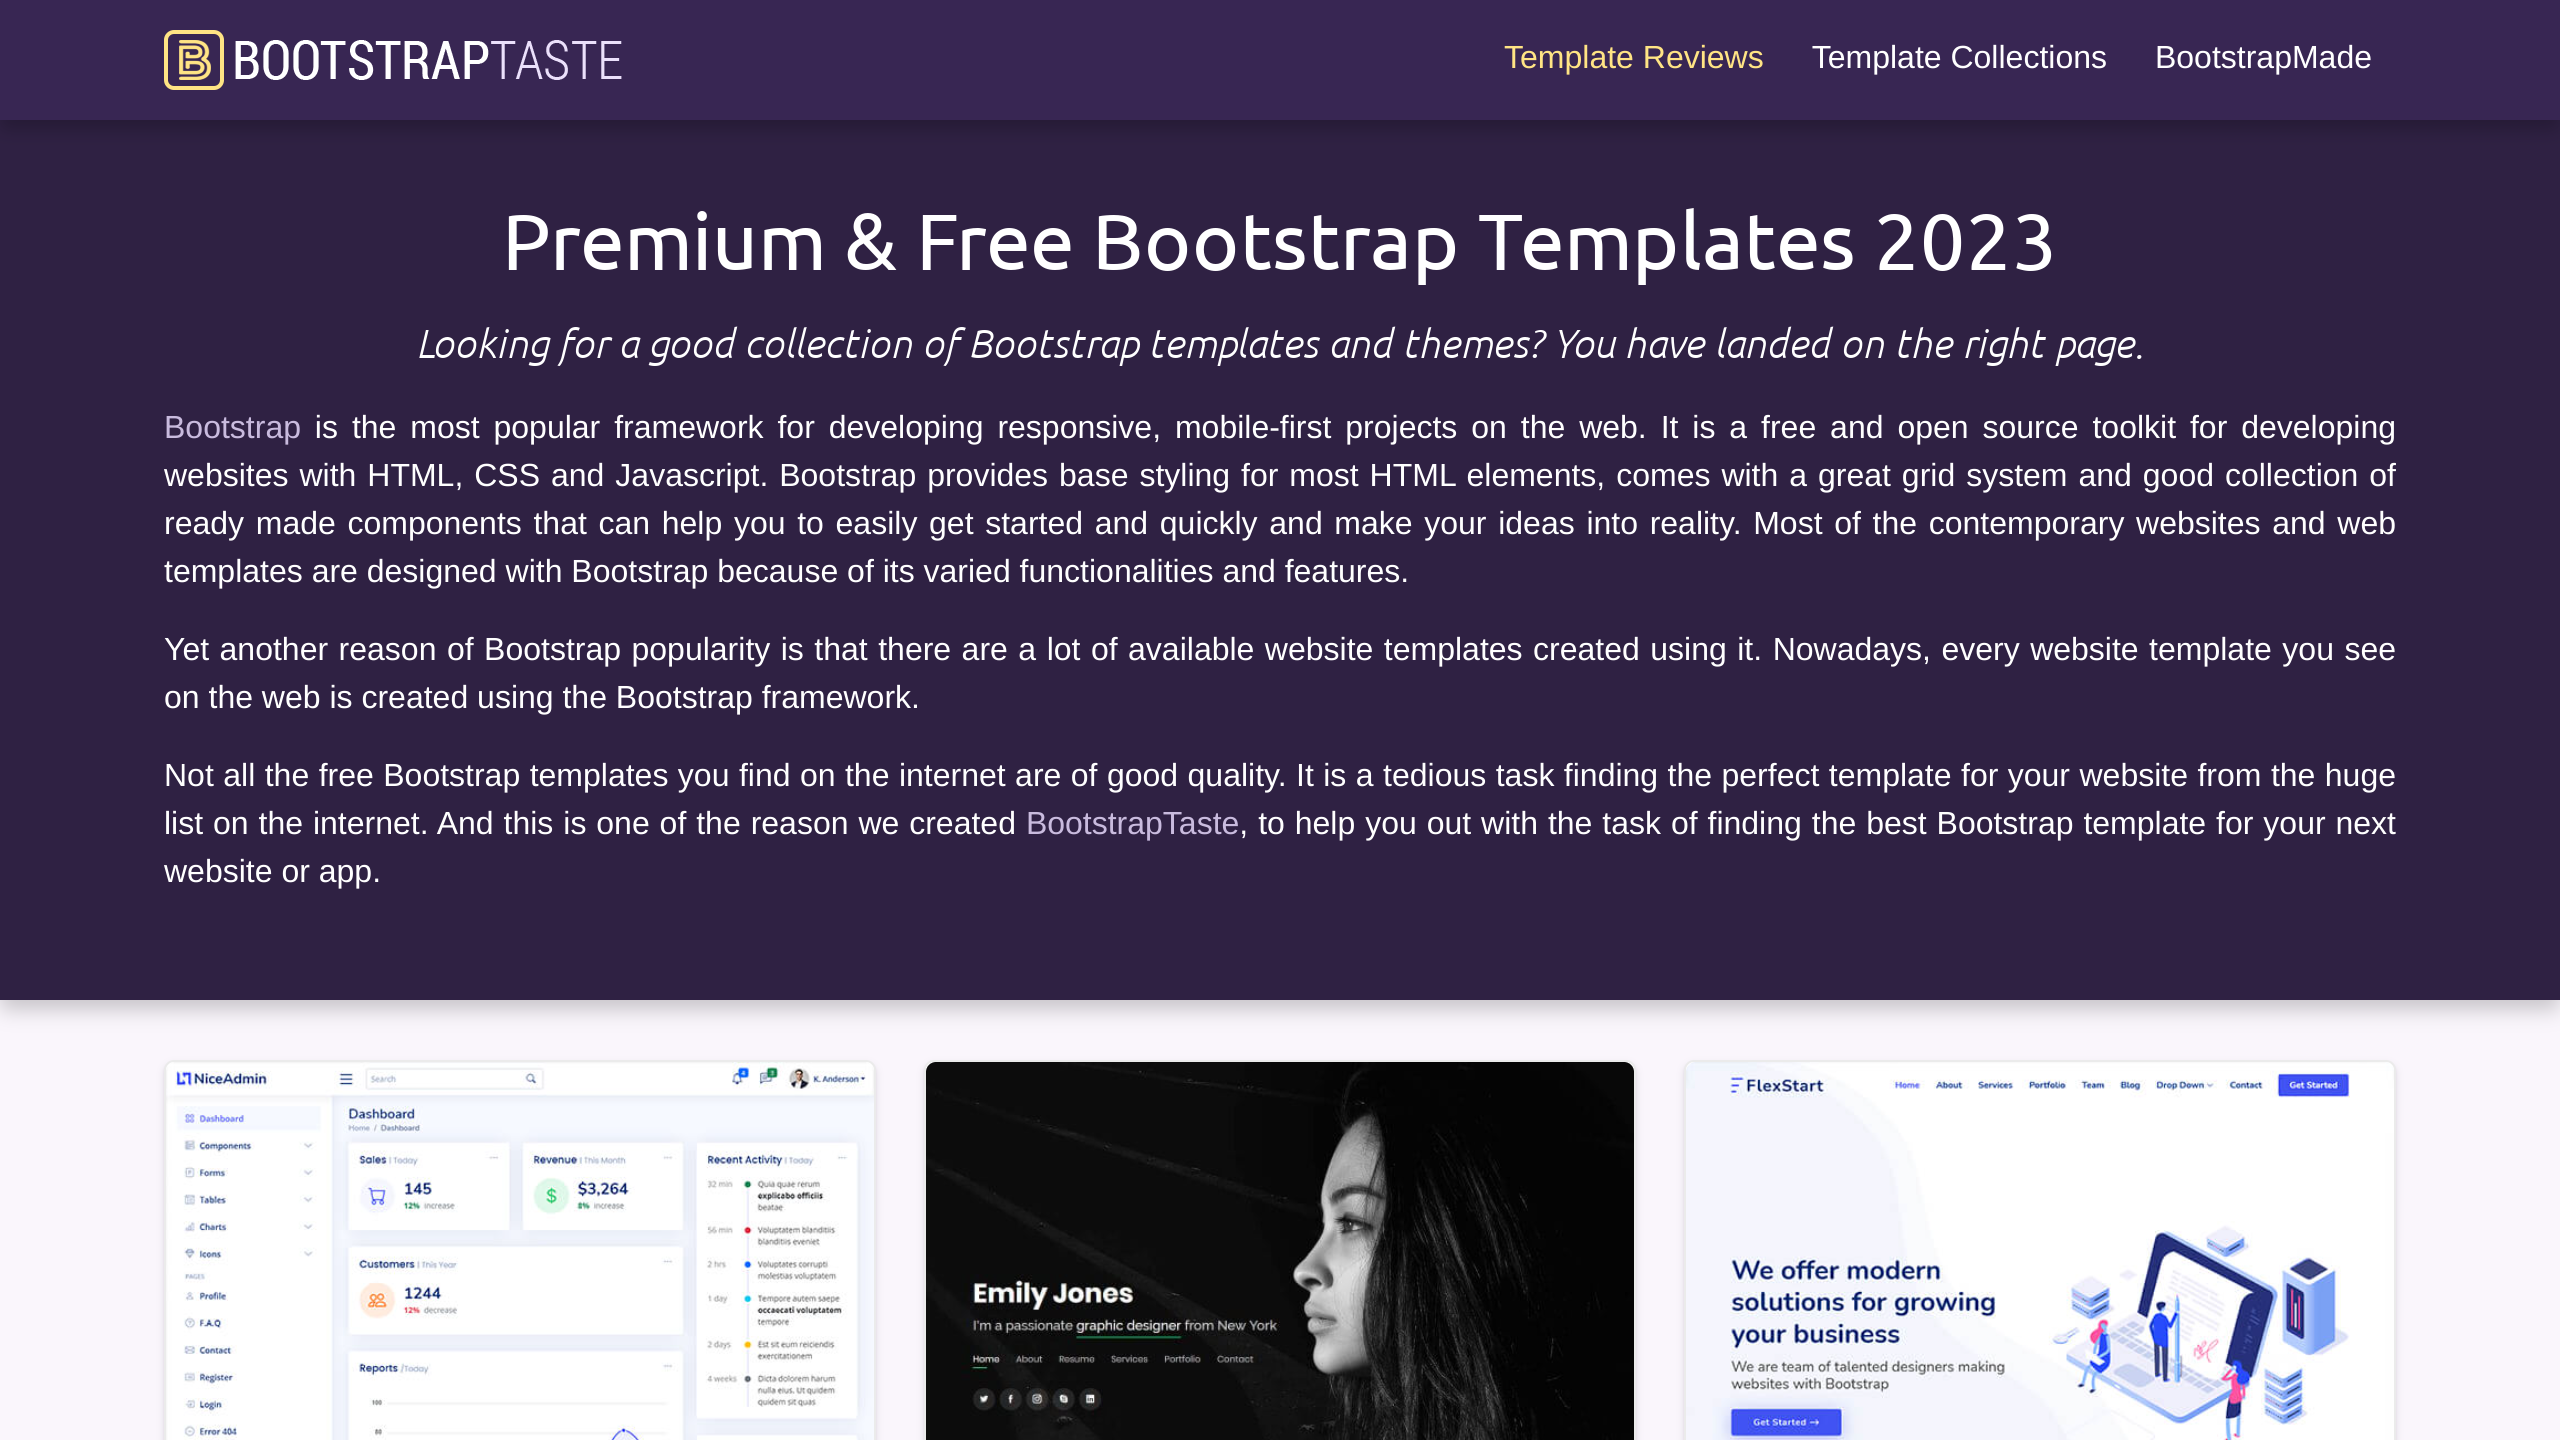 BootstrapTaste's website screenshot